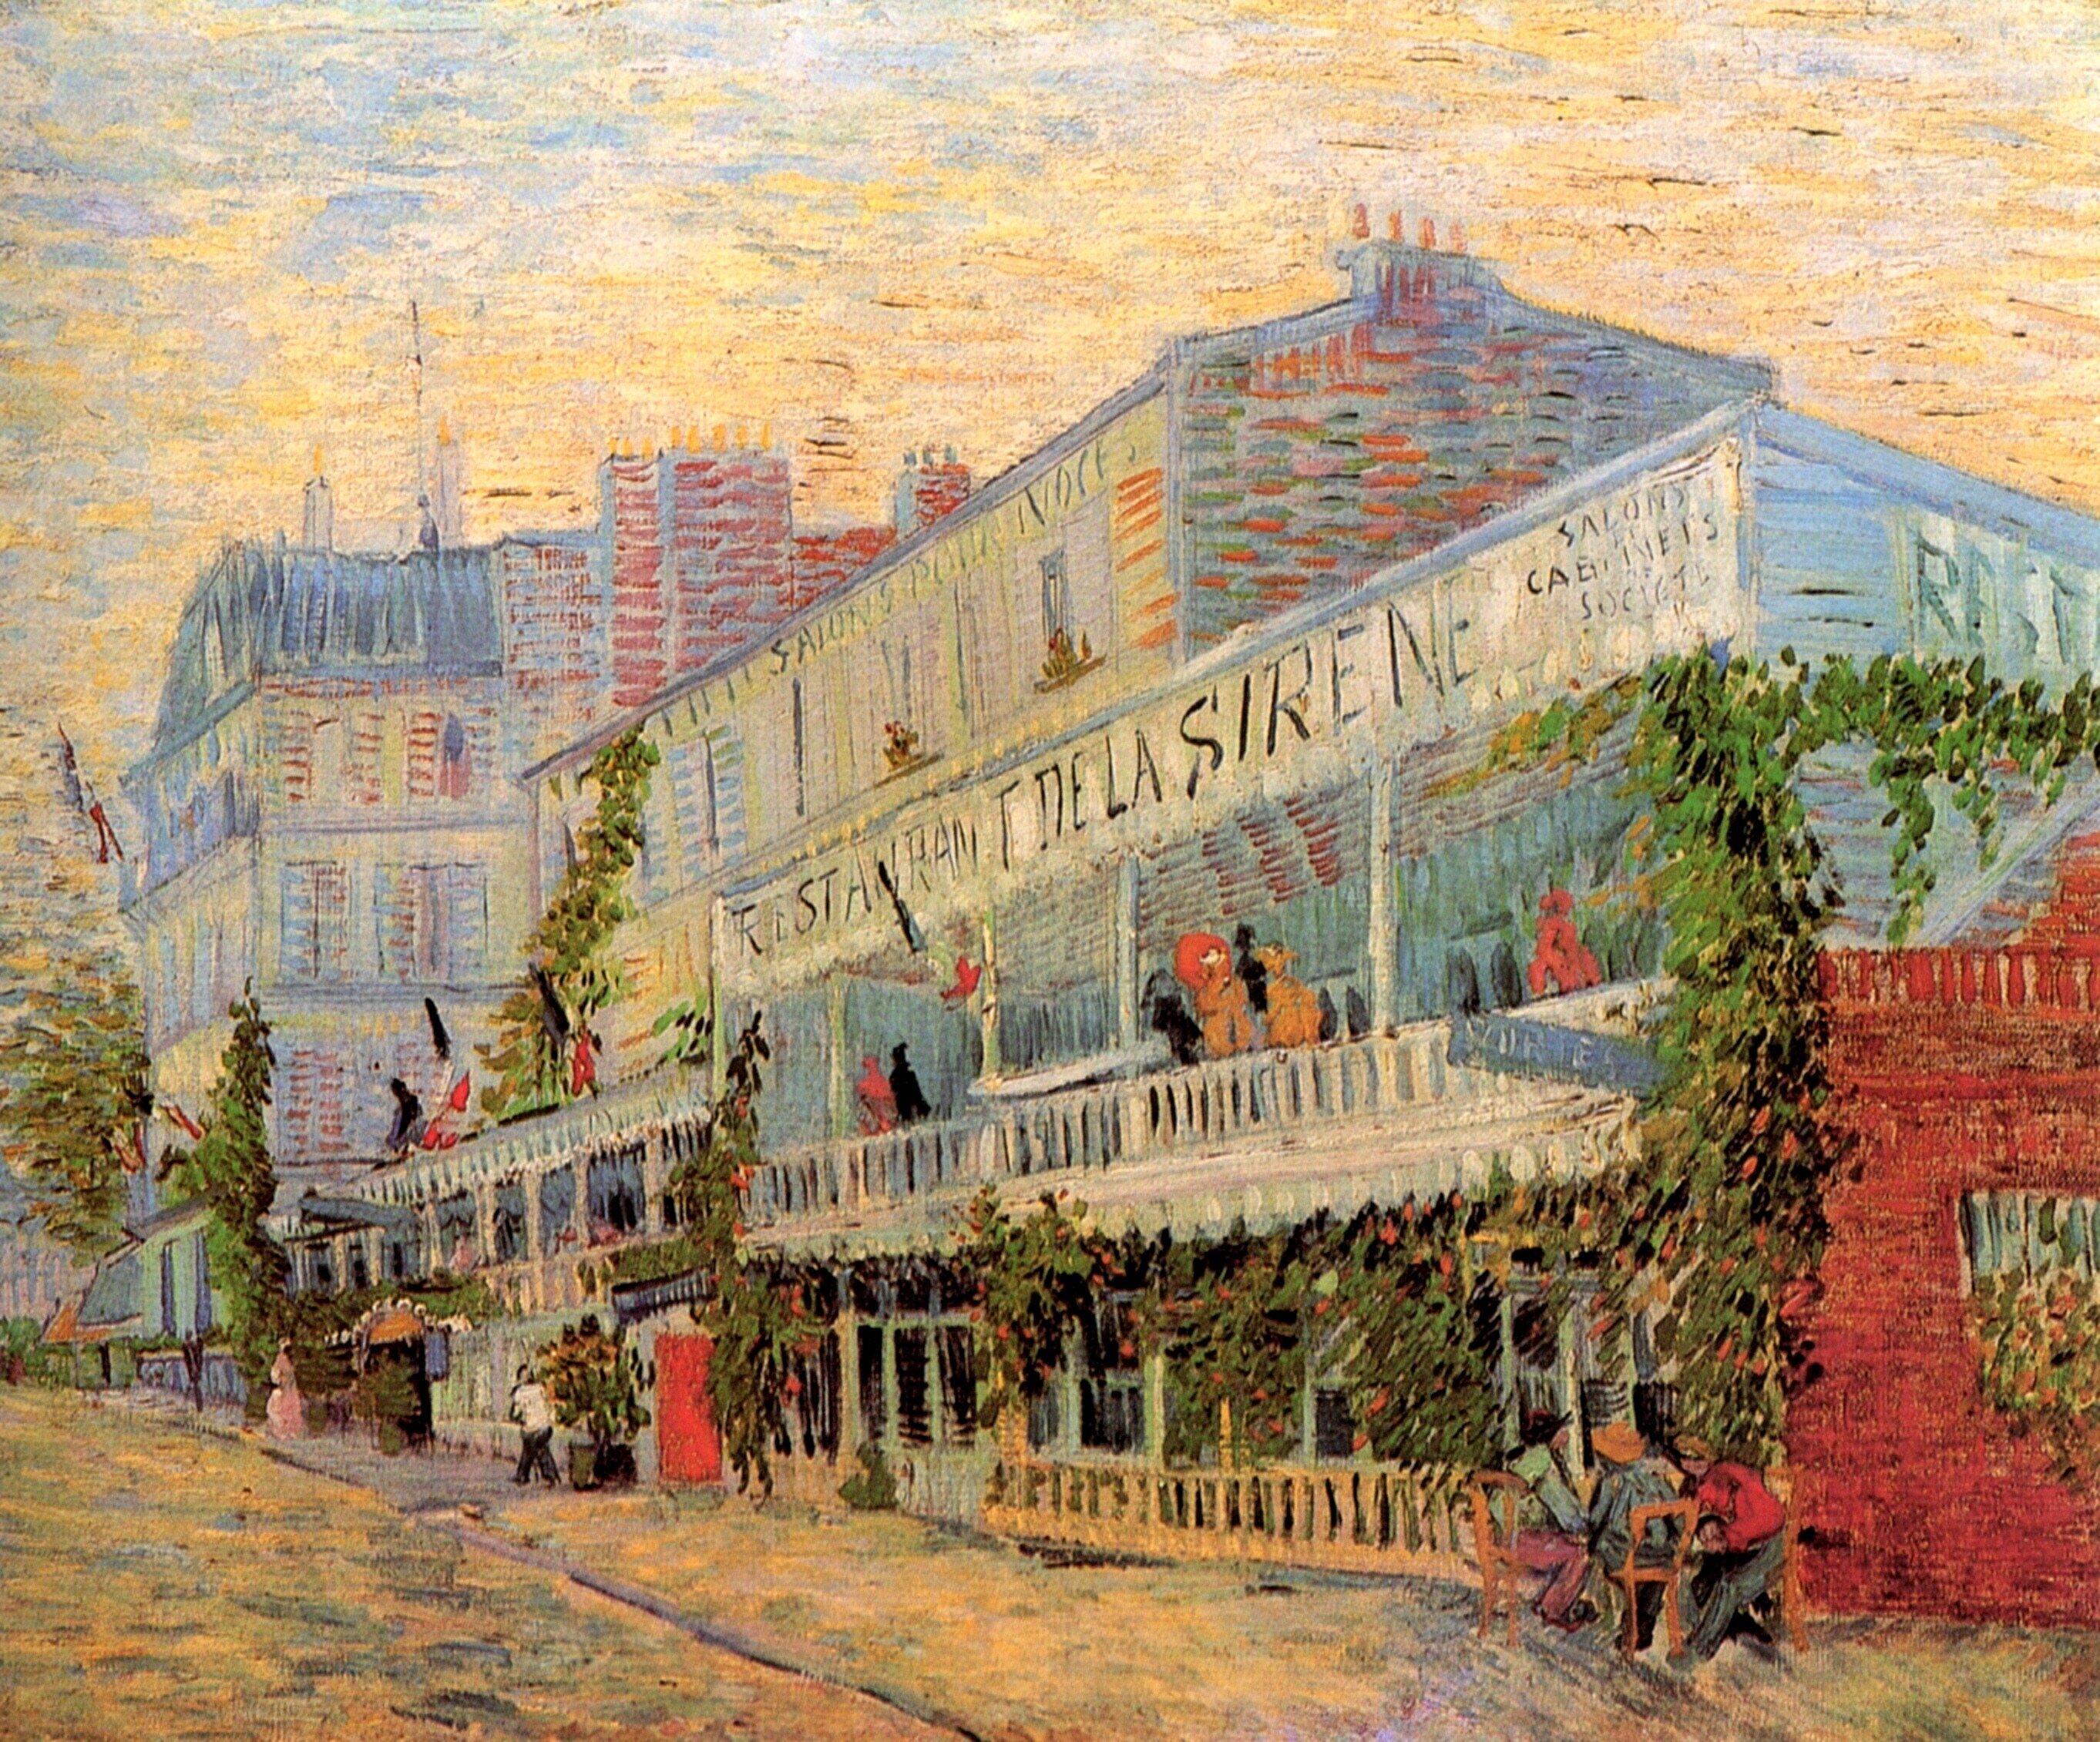  Ван Гог Париж  Ресторан-де-ла Sirene на Аньер  